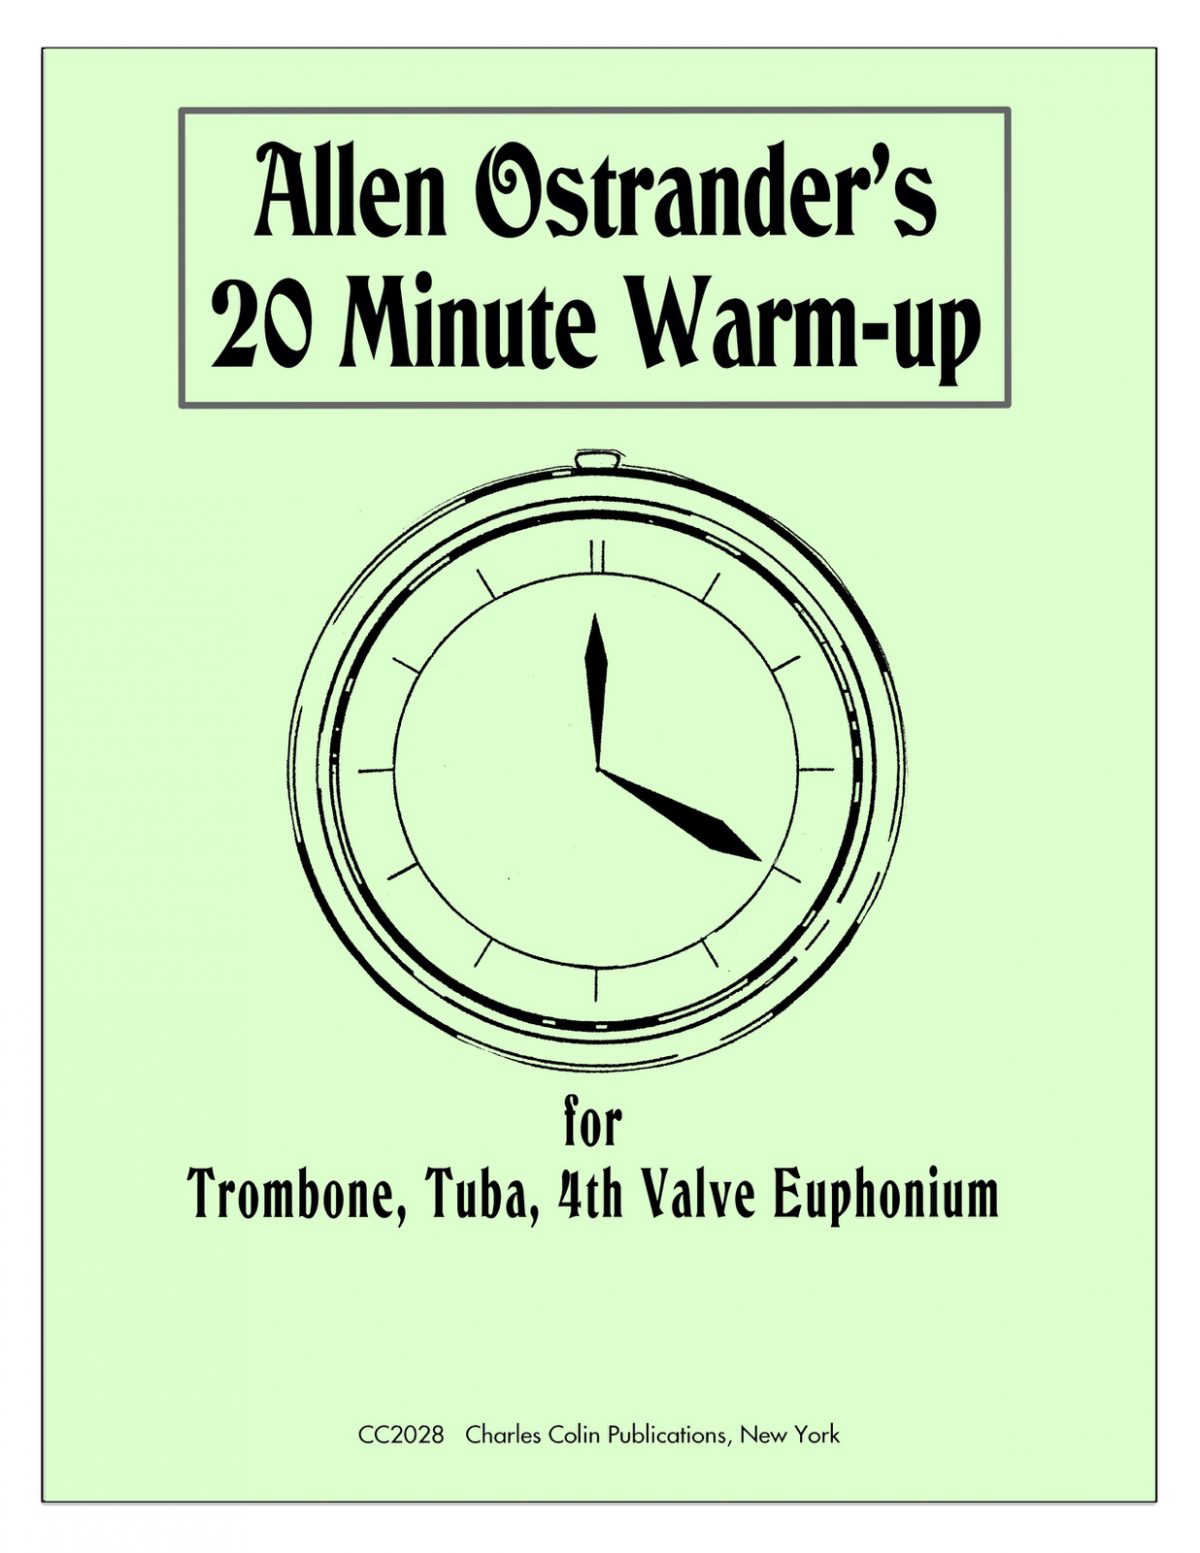 Ostrander, 20 Minute Warm-Up